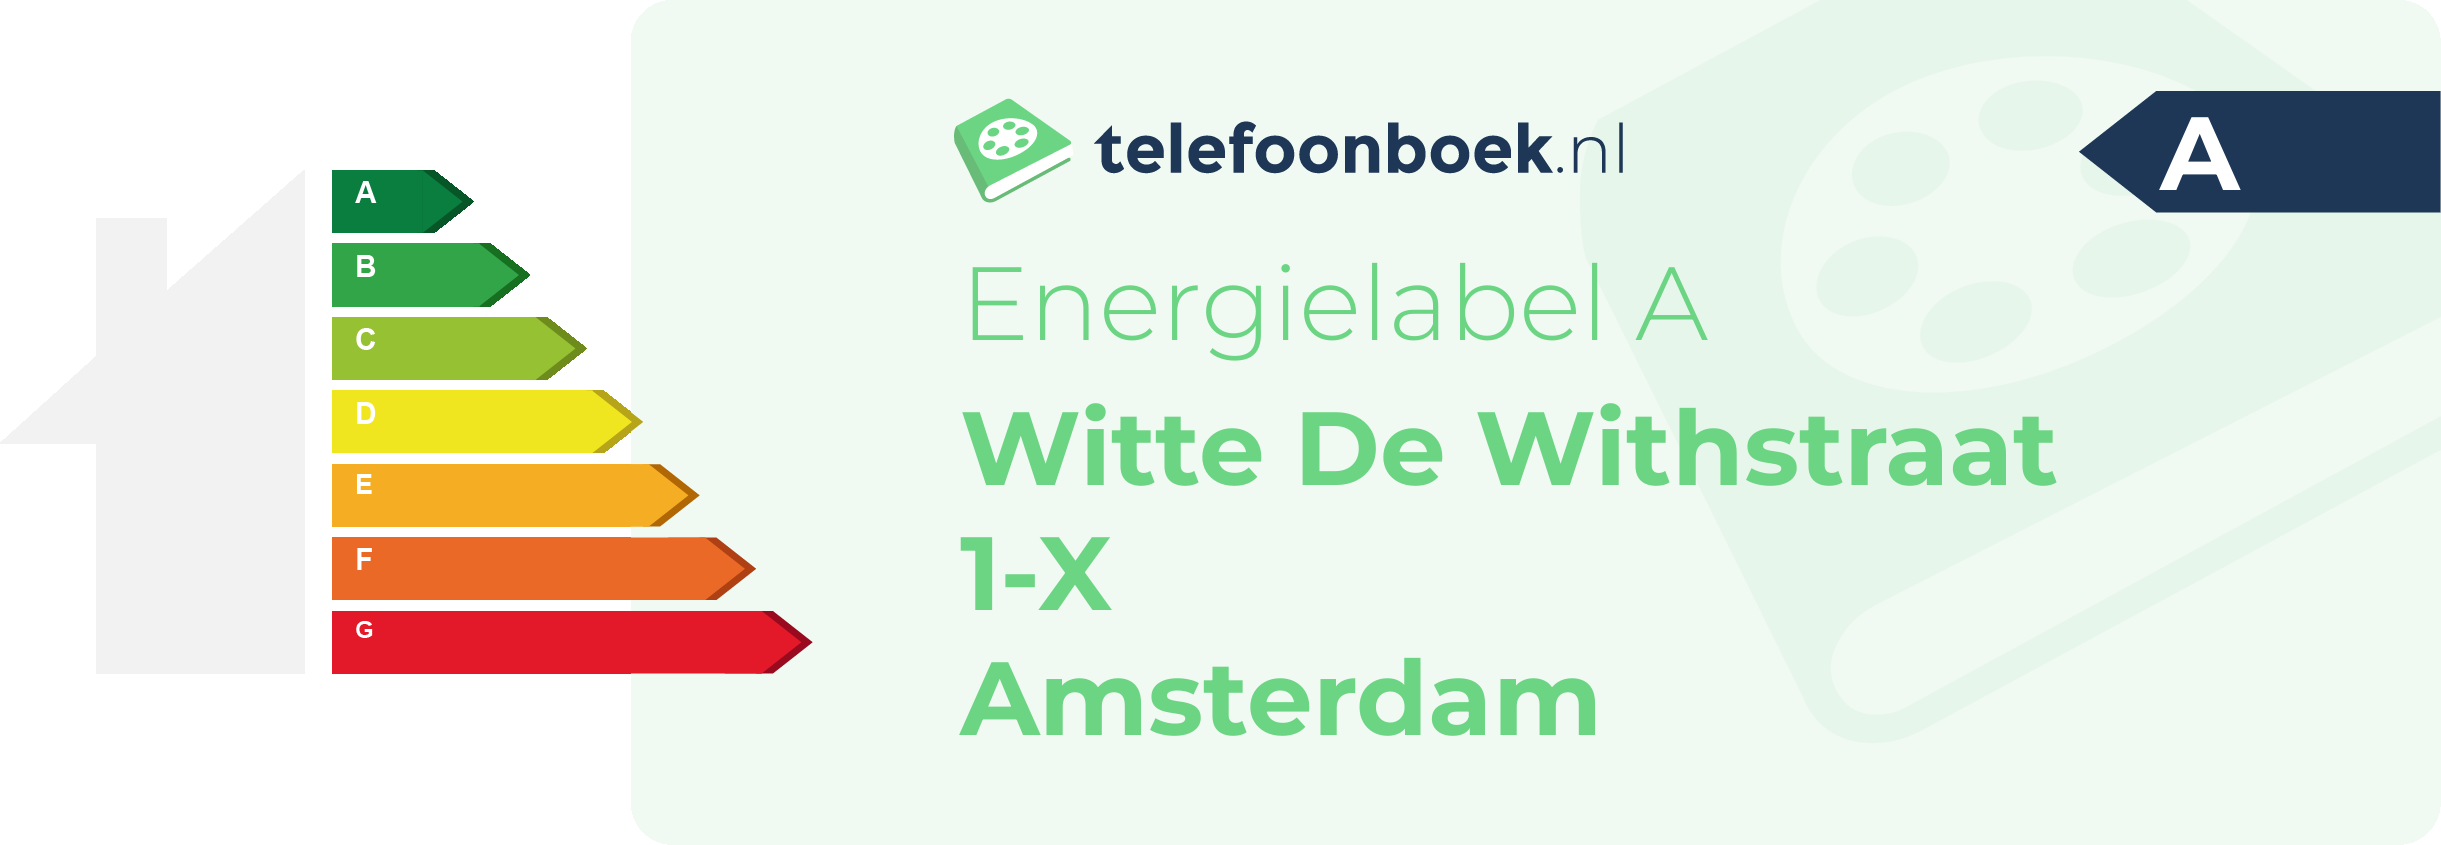 Energielabel Witte De Withstraat 1-X Amsterdam